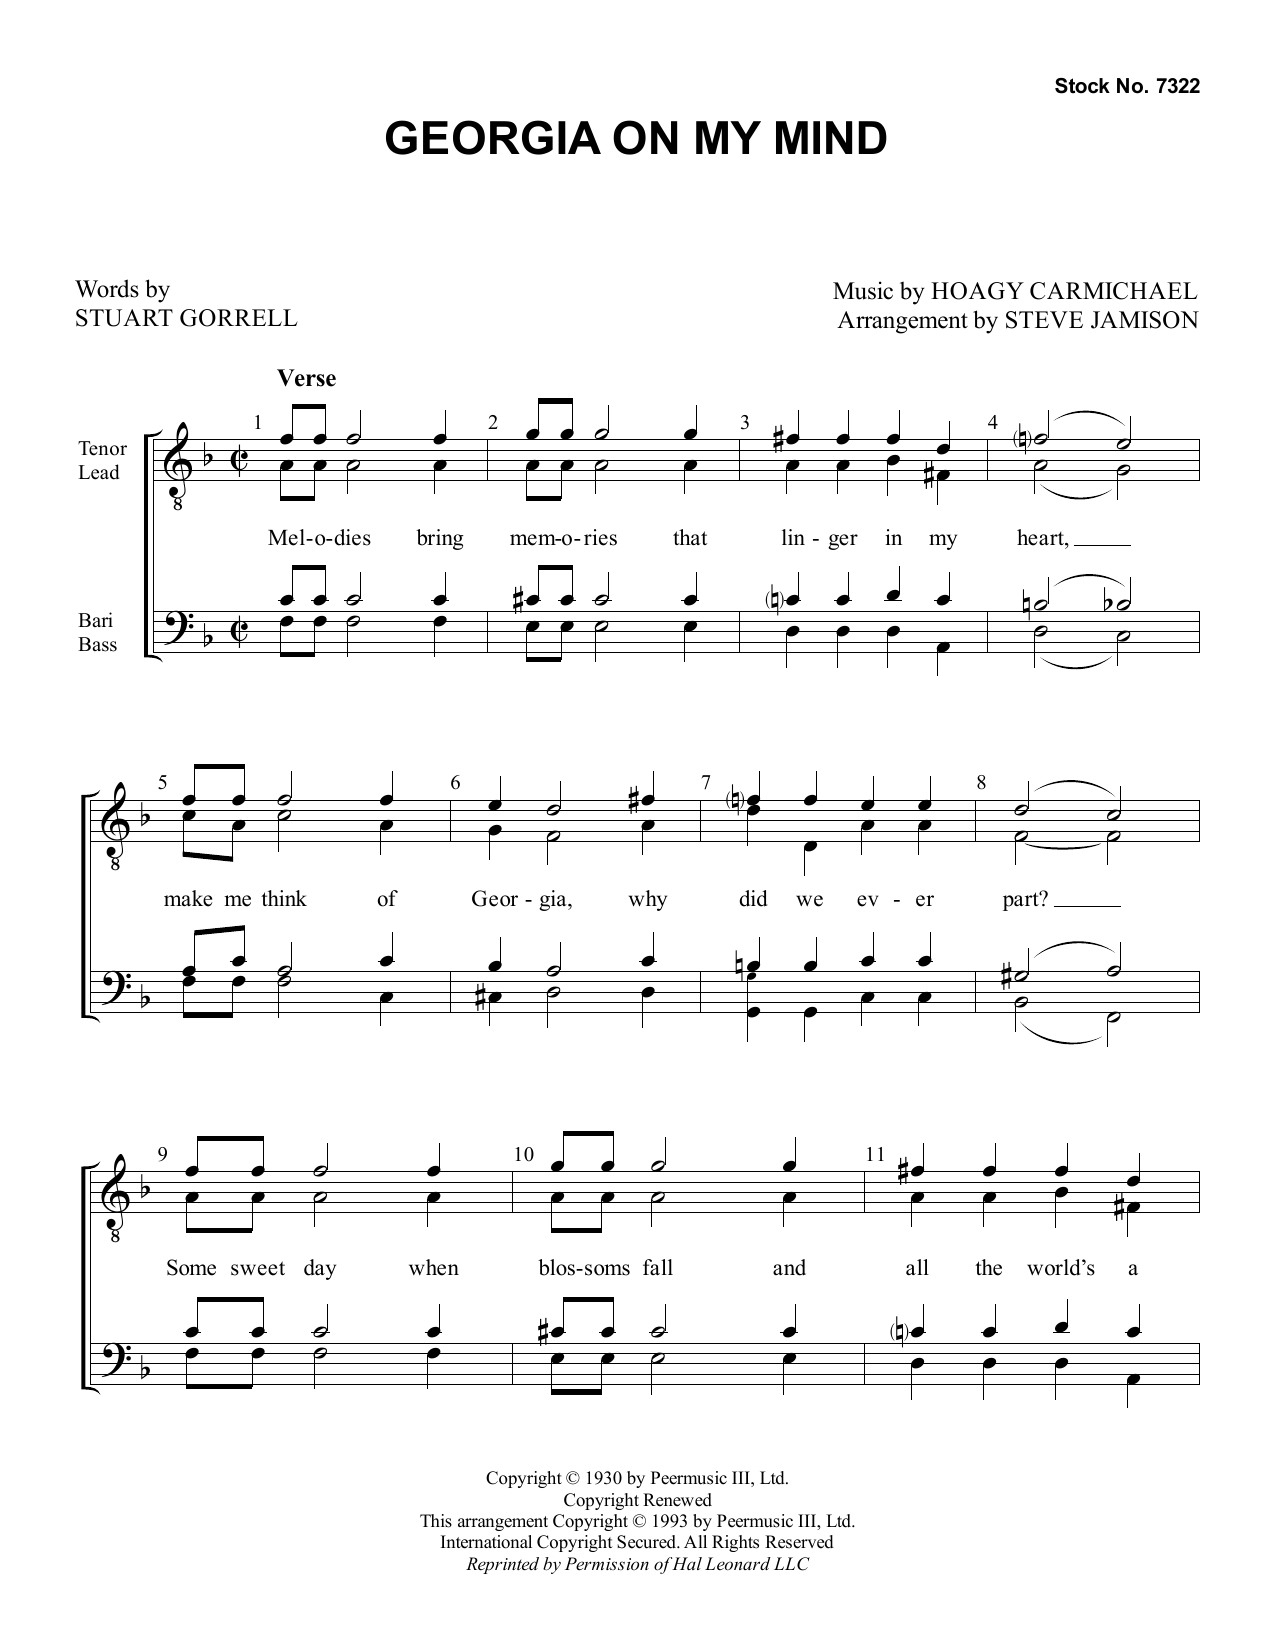 Stuart Gorrell and Hoagy Carmichael Georgia on My Mind (arr. Steve Jamison) Sheet Music Notes & Chords for SATB Choir - Download or Print PDF